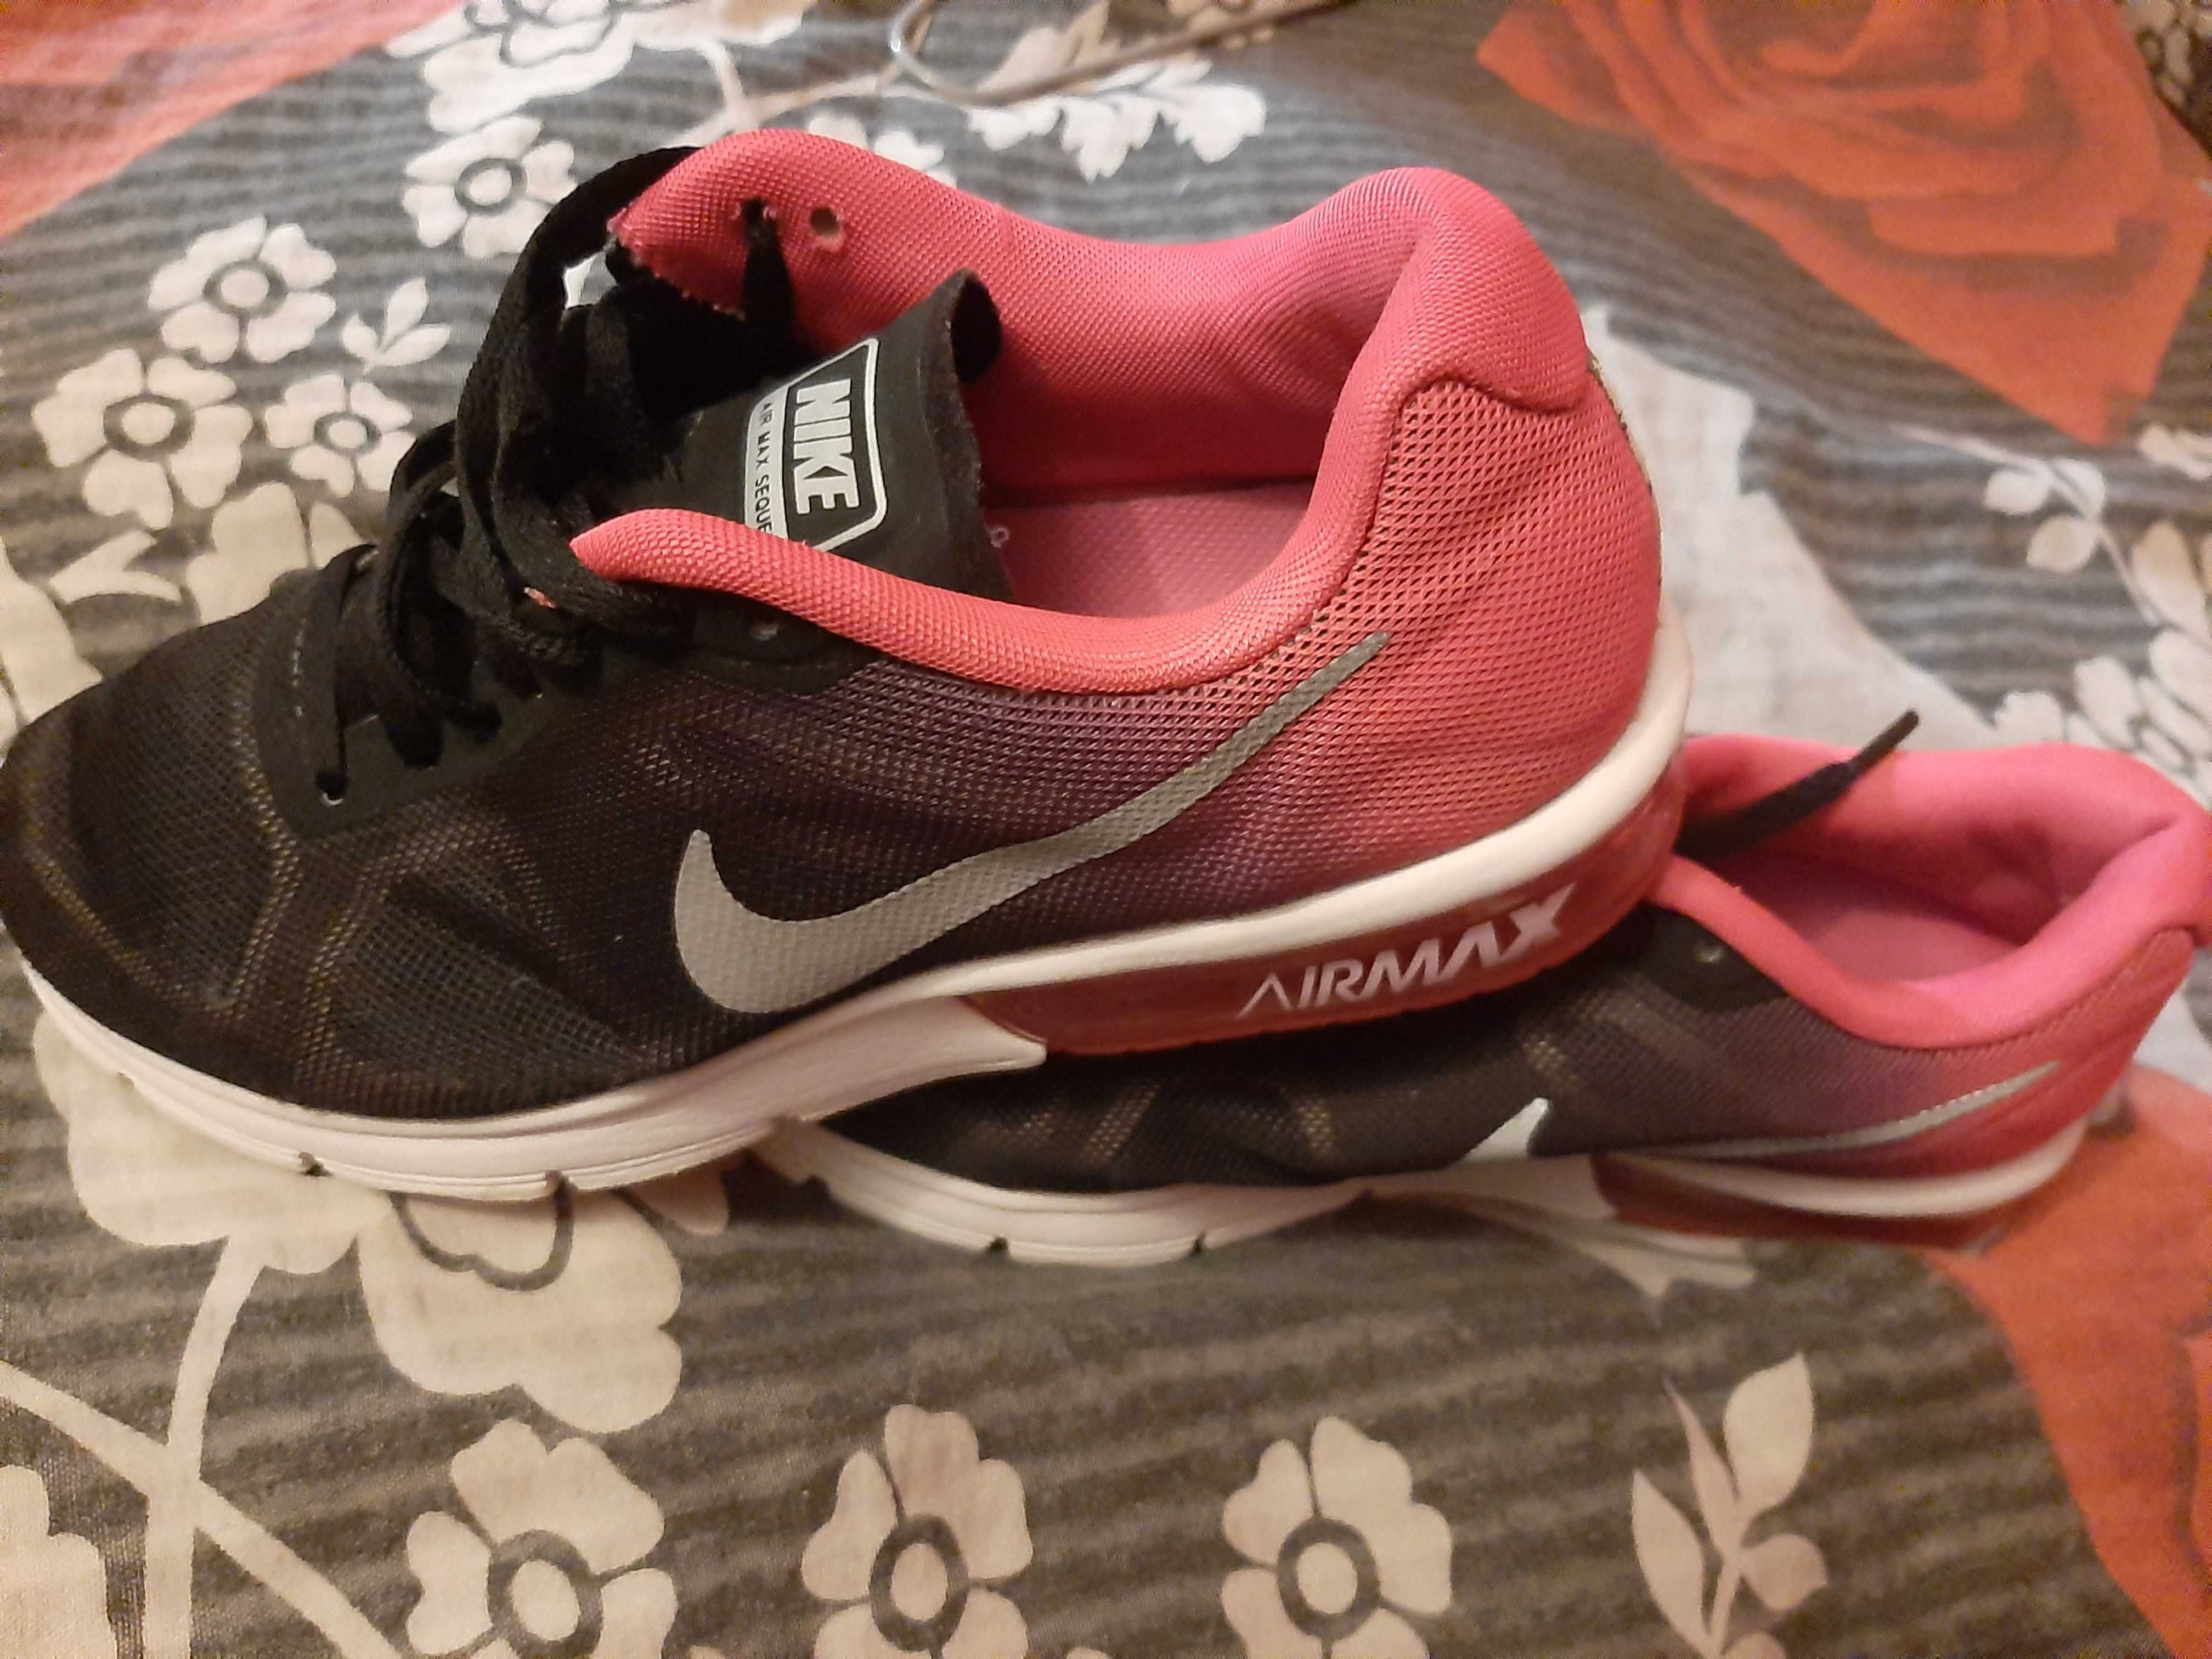 Adidasi Nike AirMax 38